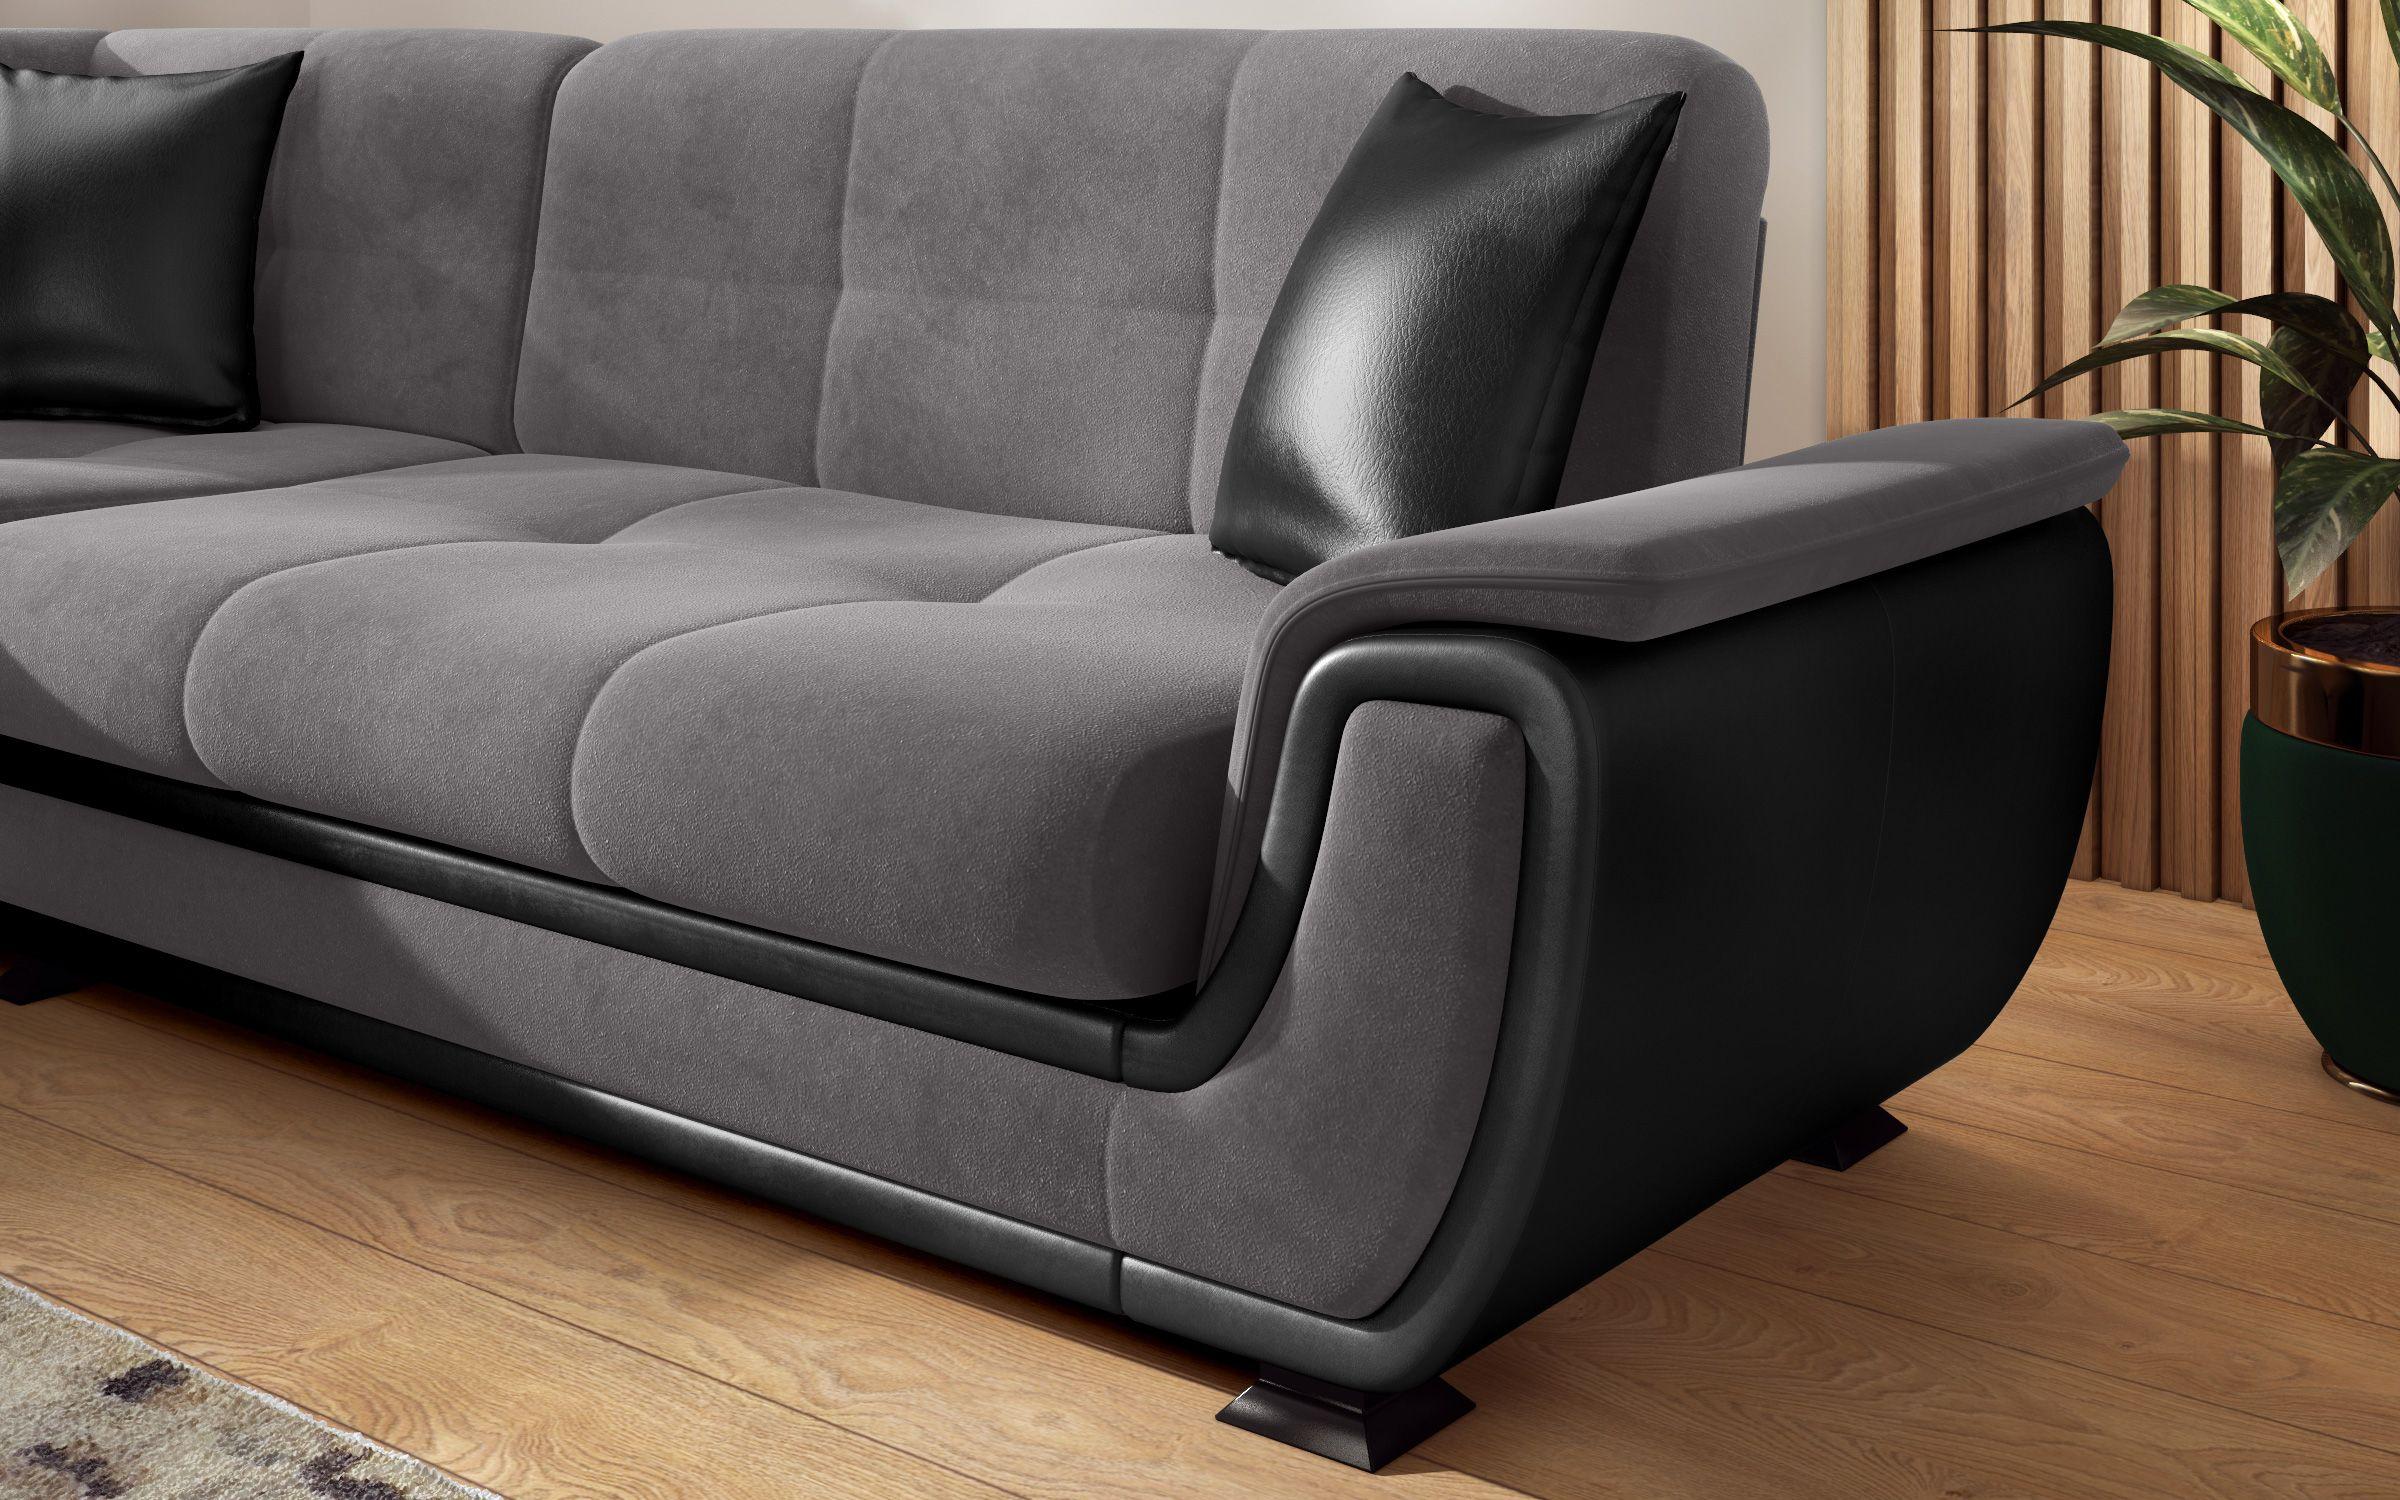 Kλικ - κλακ καναπές Princess II S + μηχανισμός |  γκρι + μαύρο δέρμα, γκρι + μαύρο δέρμα  3